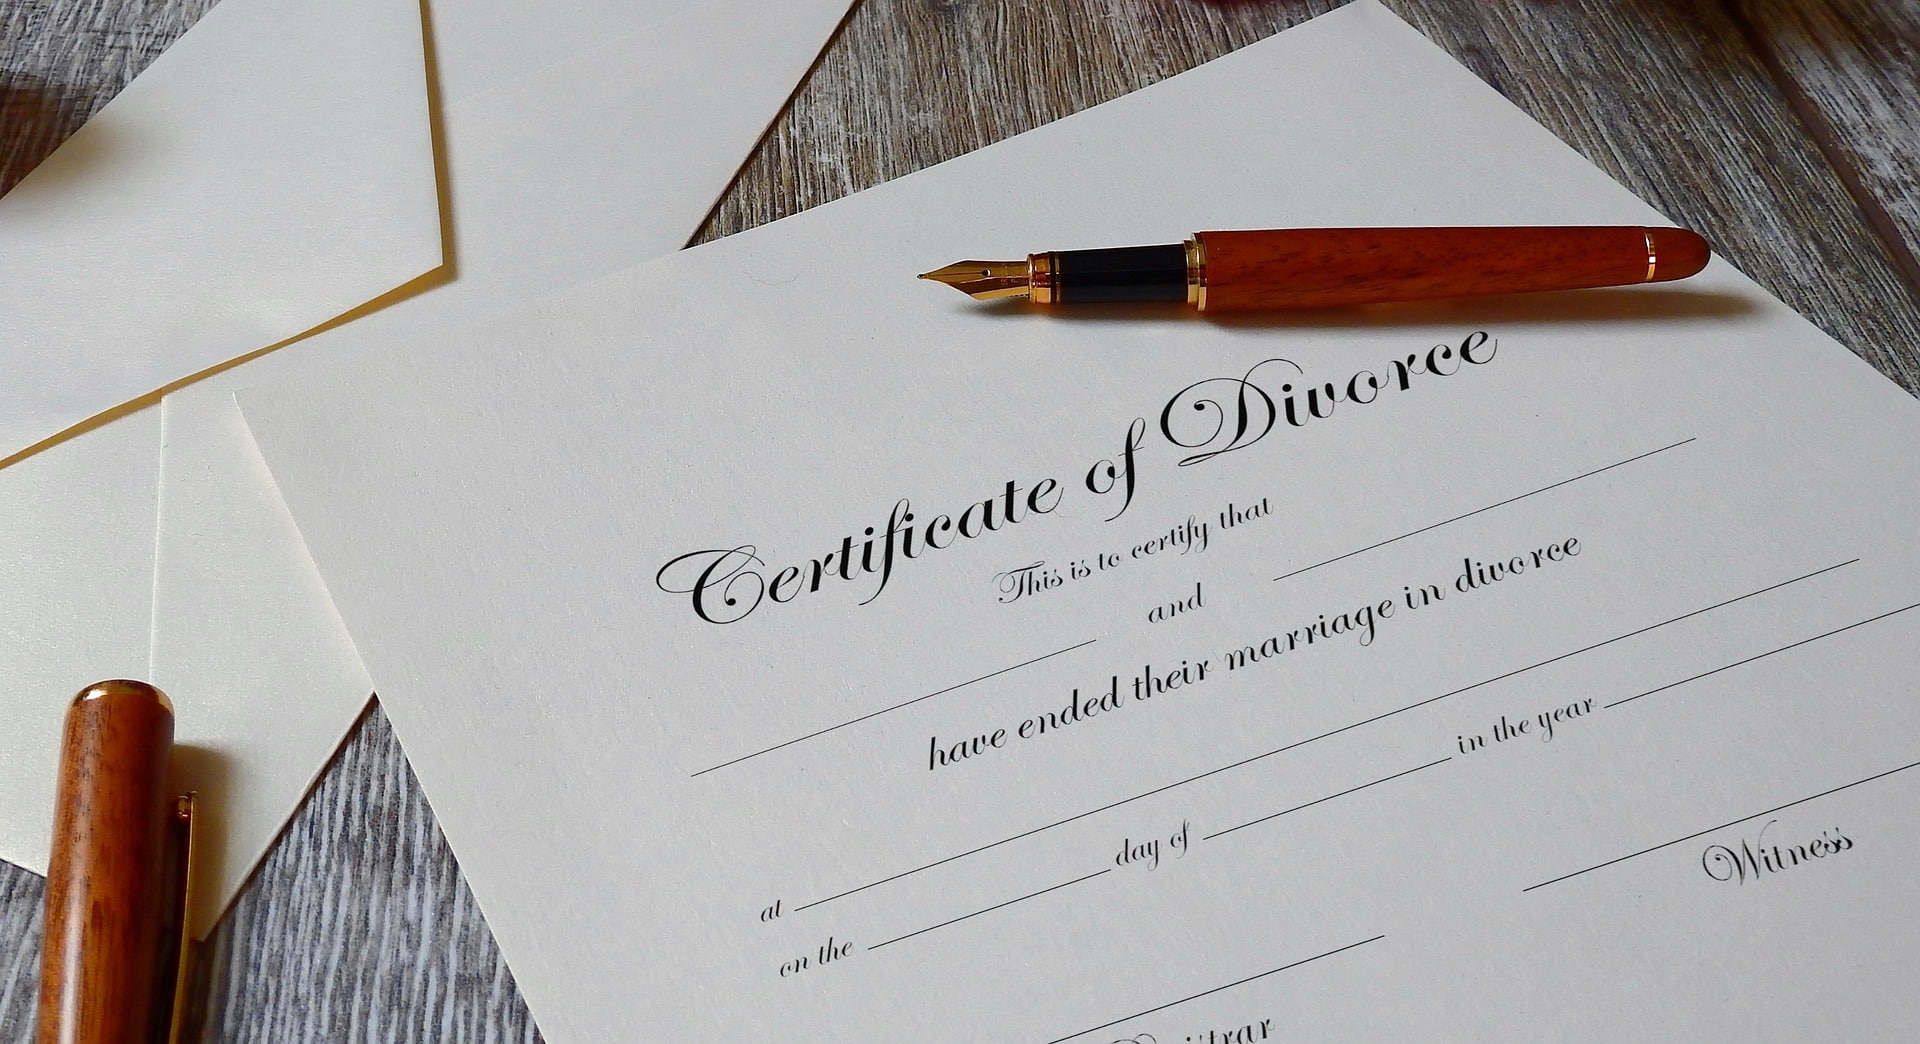 Colorado Springs Divorce Attorney can help with Post-Decree Modifications